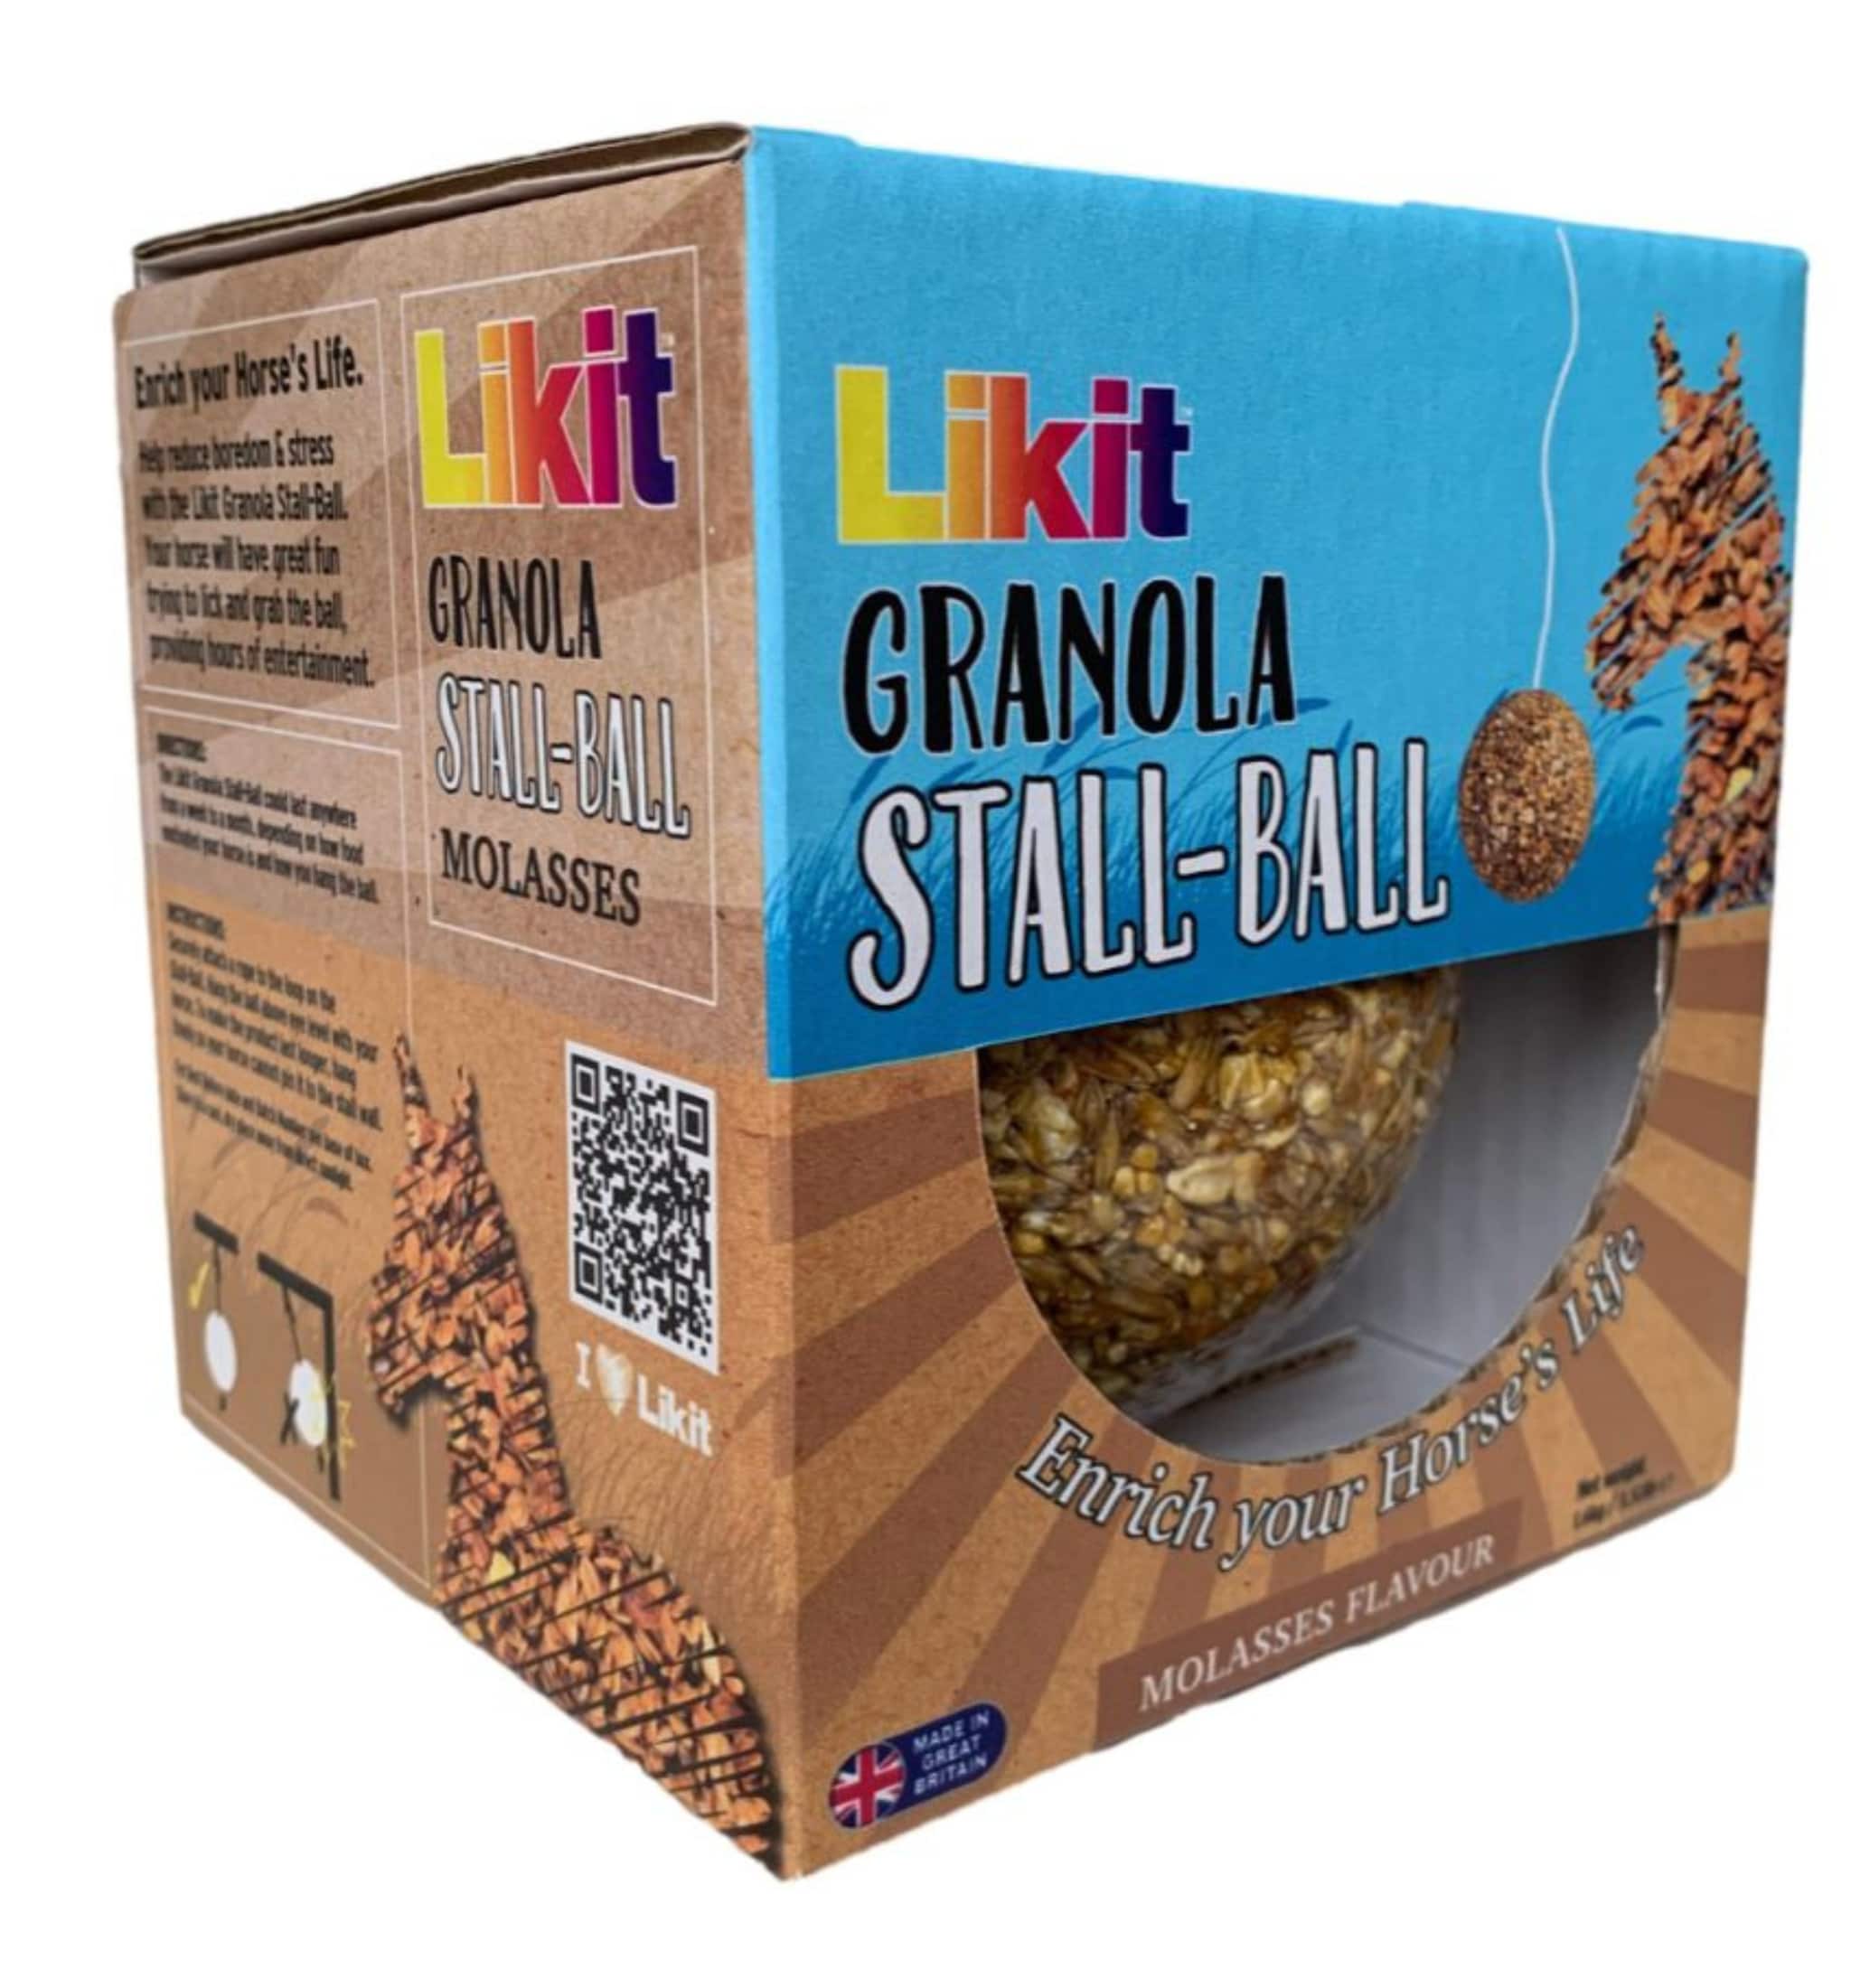 Likit Granola Stall Ball - Molasses